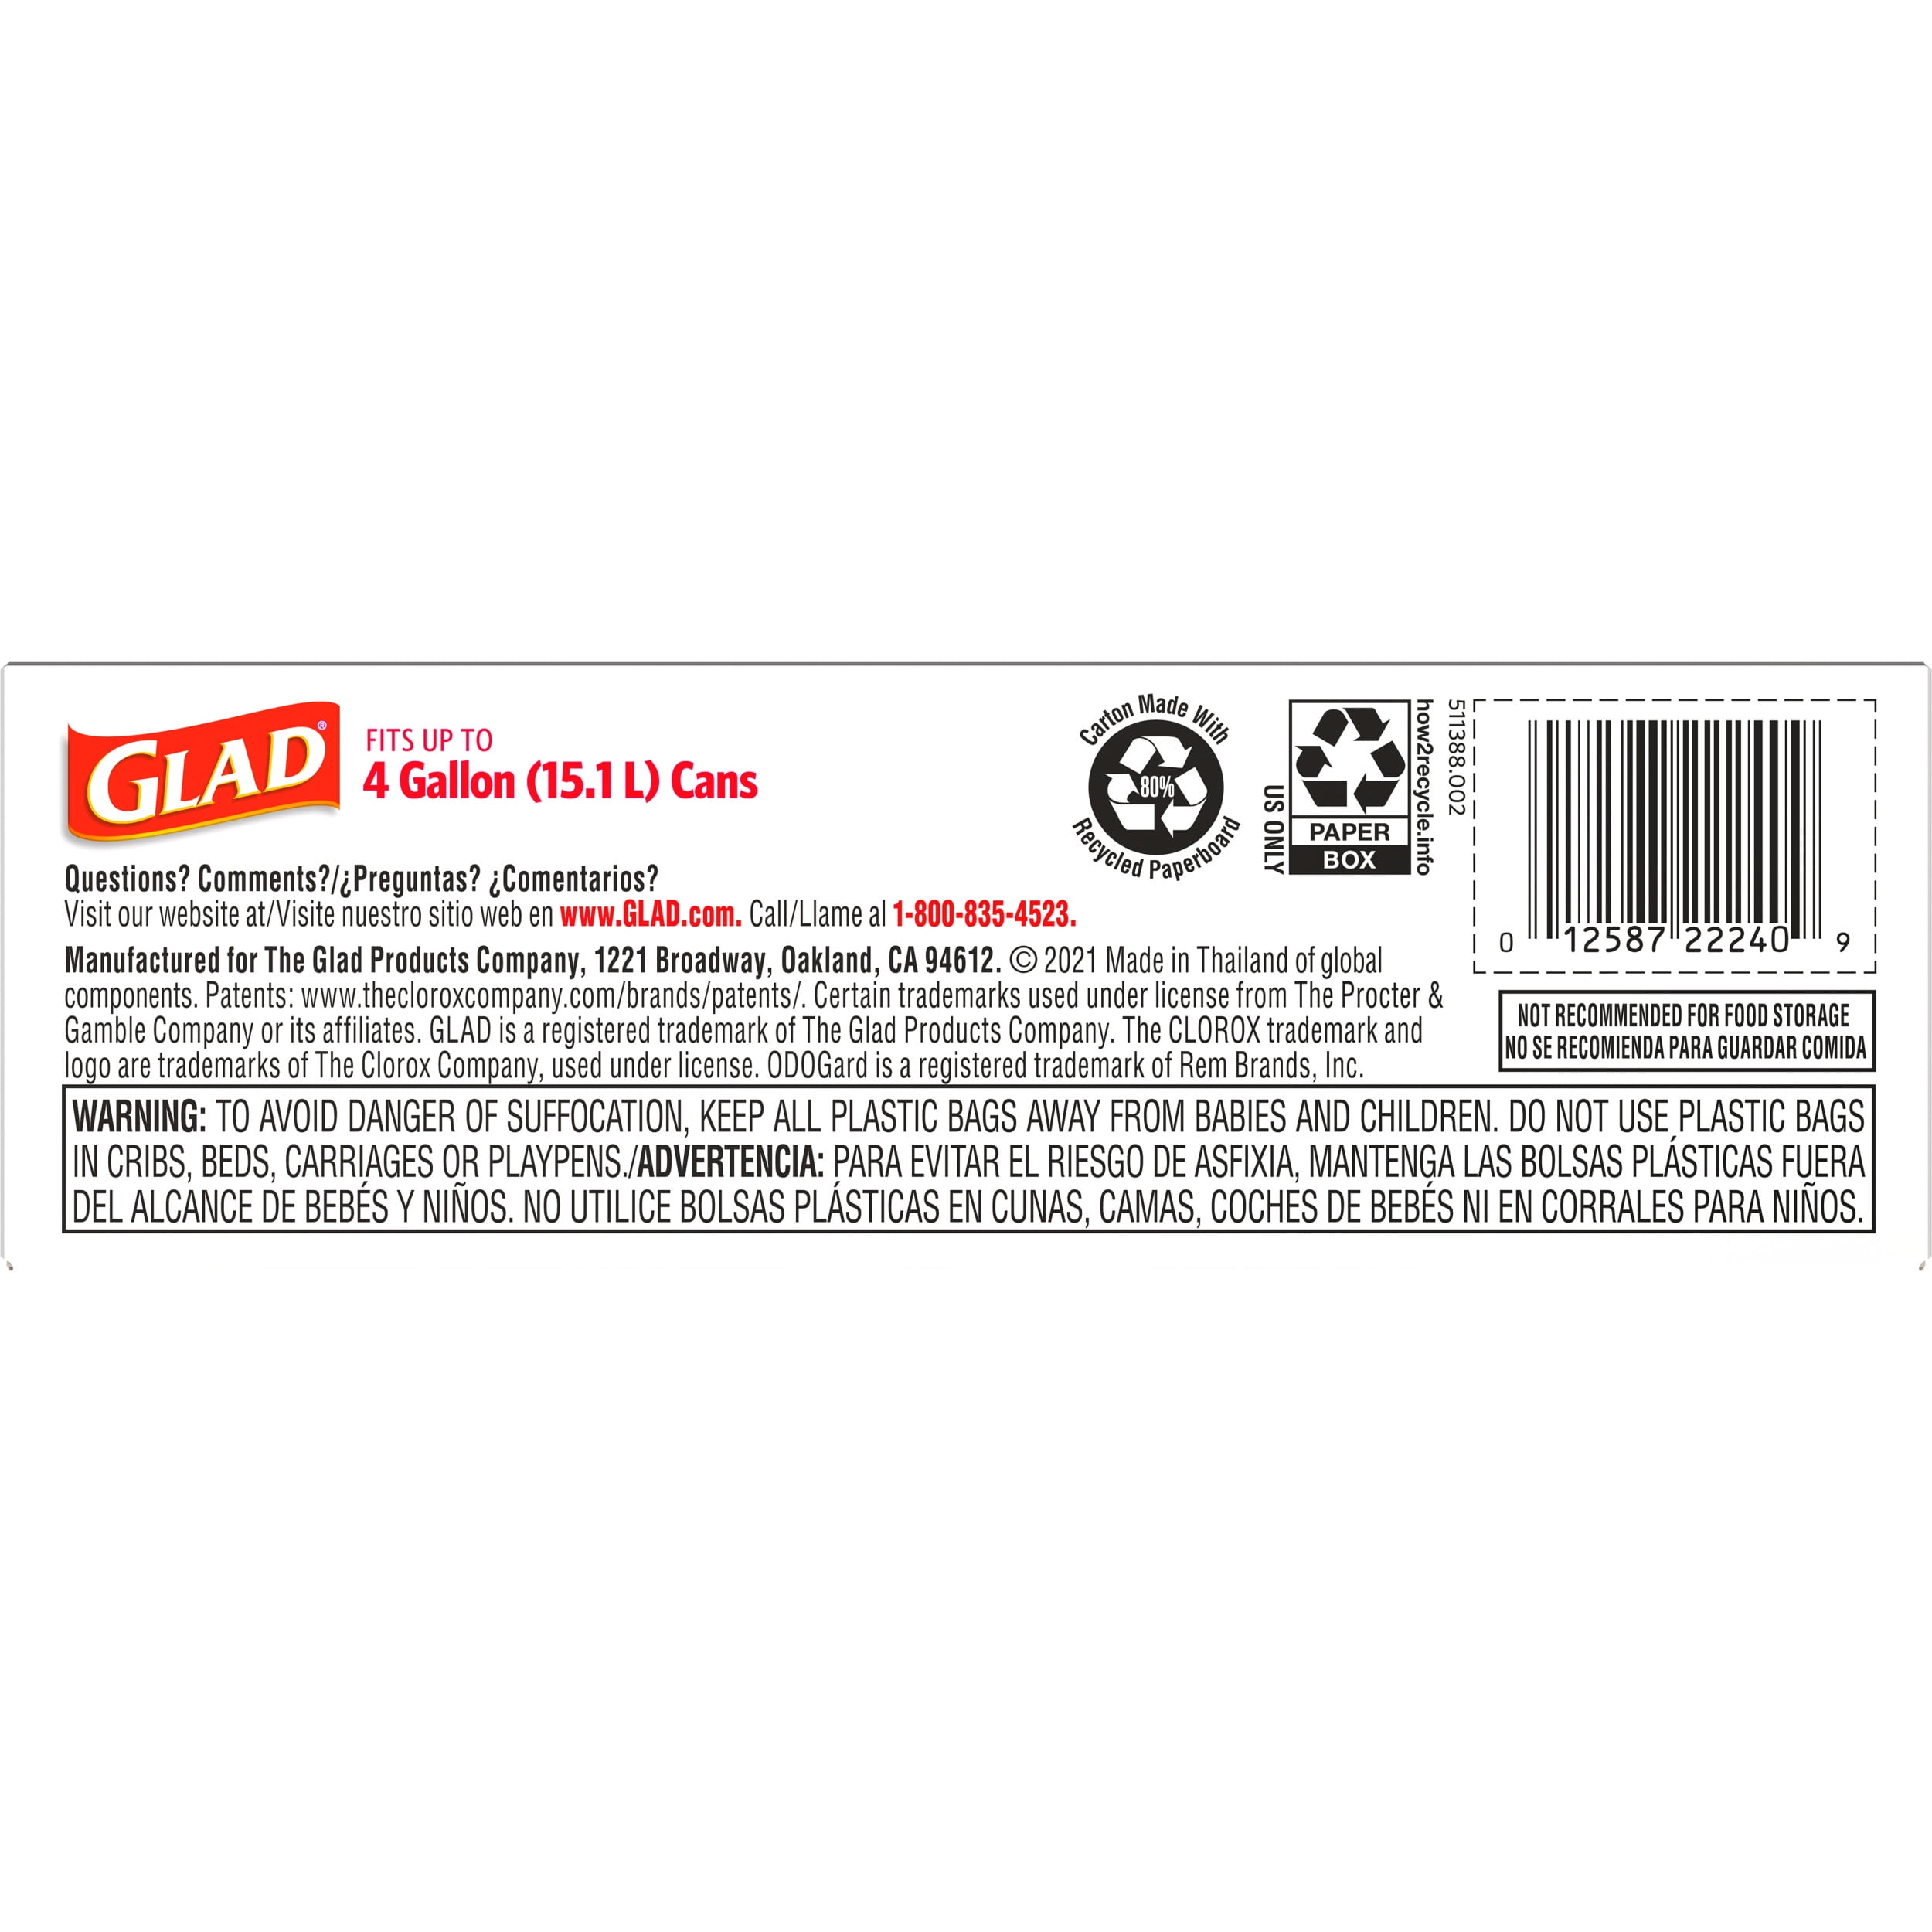 Glad with Clorox 8-Gallons Lemon Fresh Bleach Gray Plastic Wastebasket  Drawstring Trash Bag (26-Count)